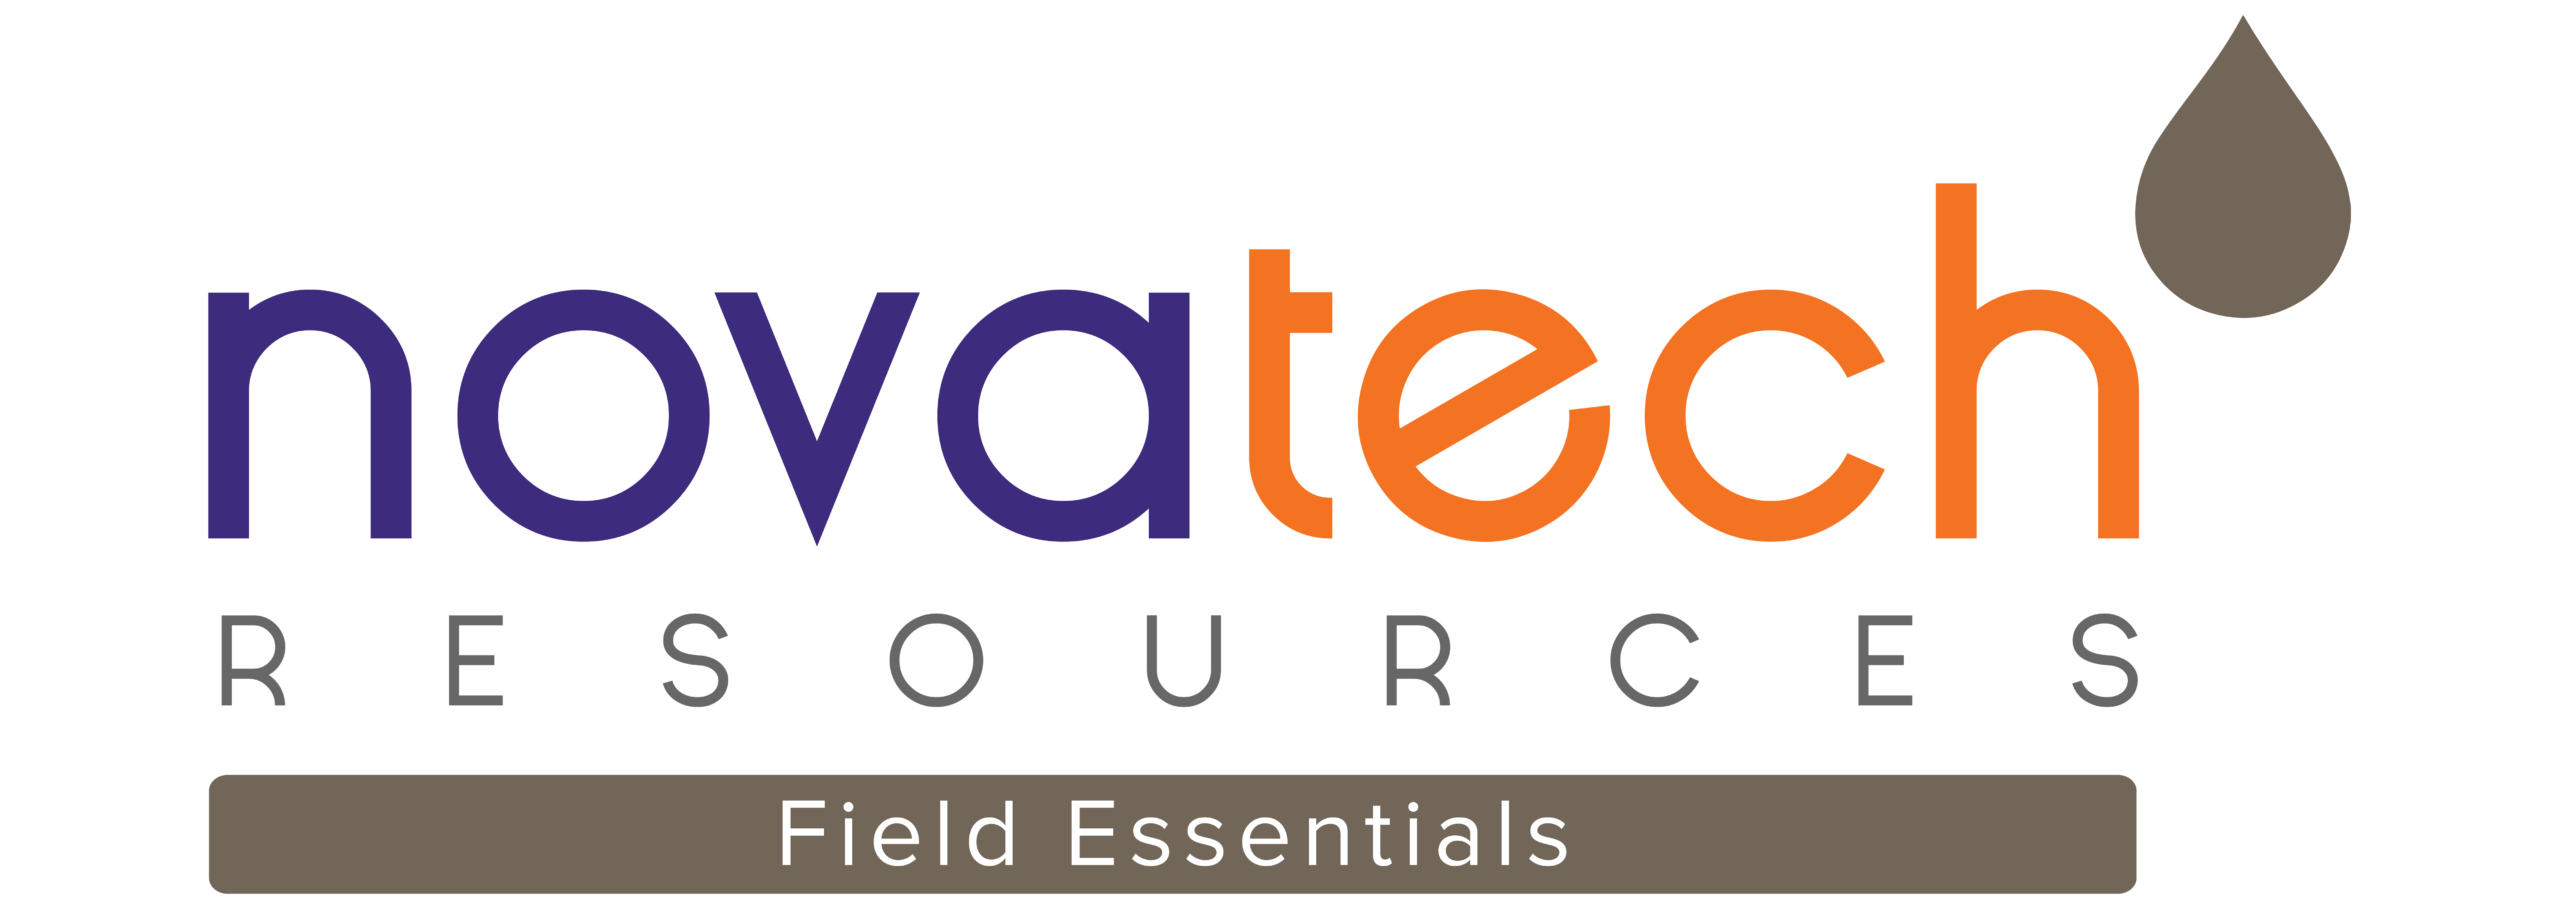 Field Essentials By Novatech Resources | Singapore